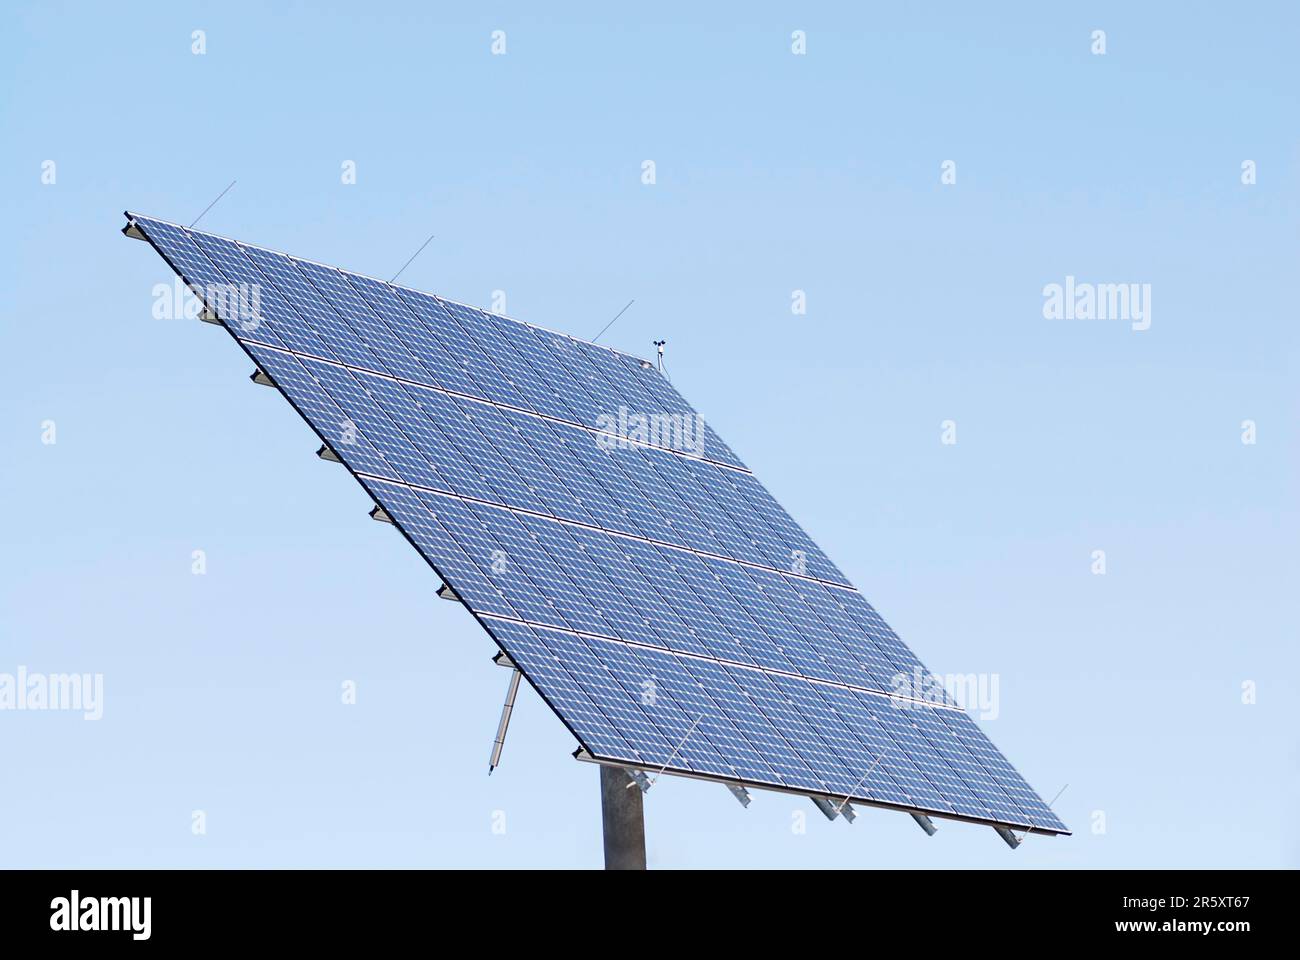 Innovative alternative energy with photovoltaic cells Stock Photo